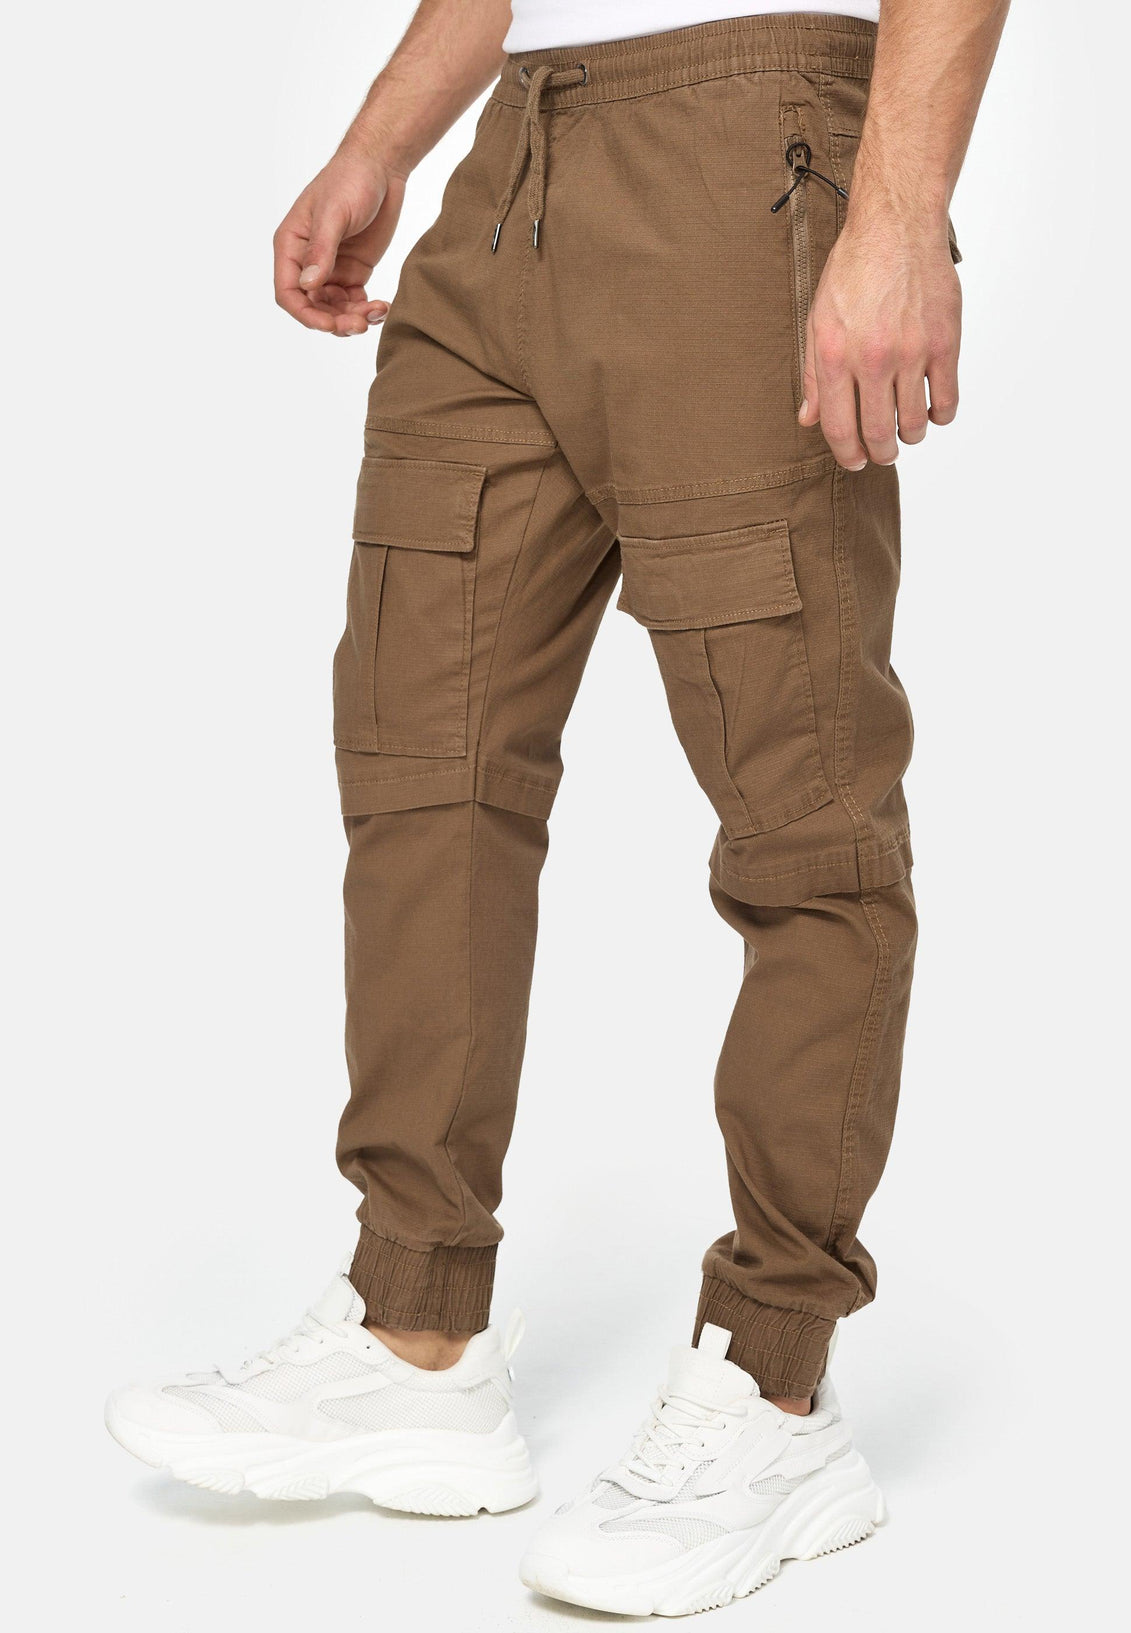 Indicode men's Kerr cargo pants made of 98% cotton incl. belt